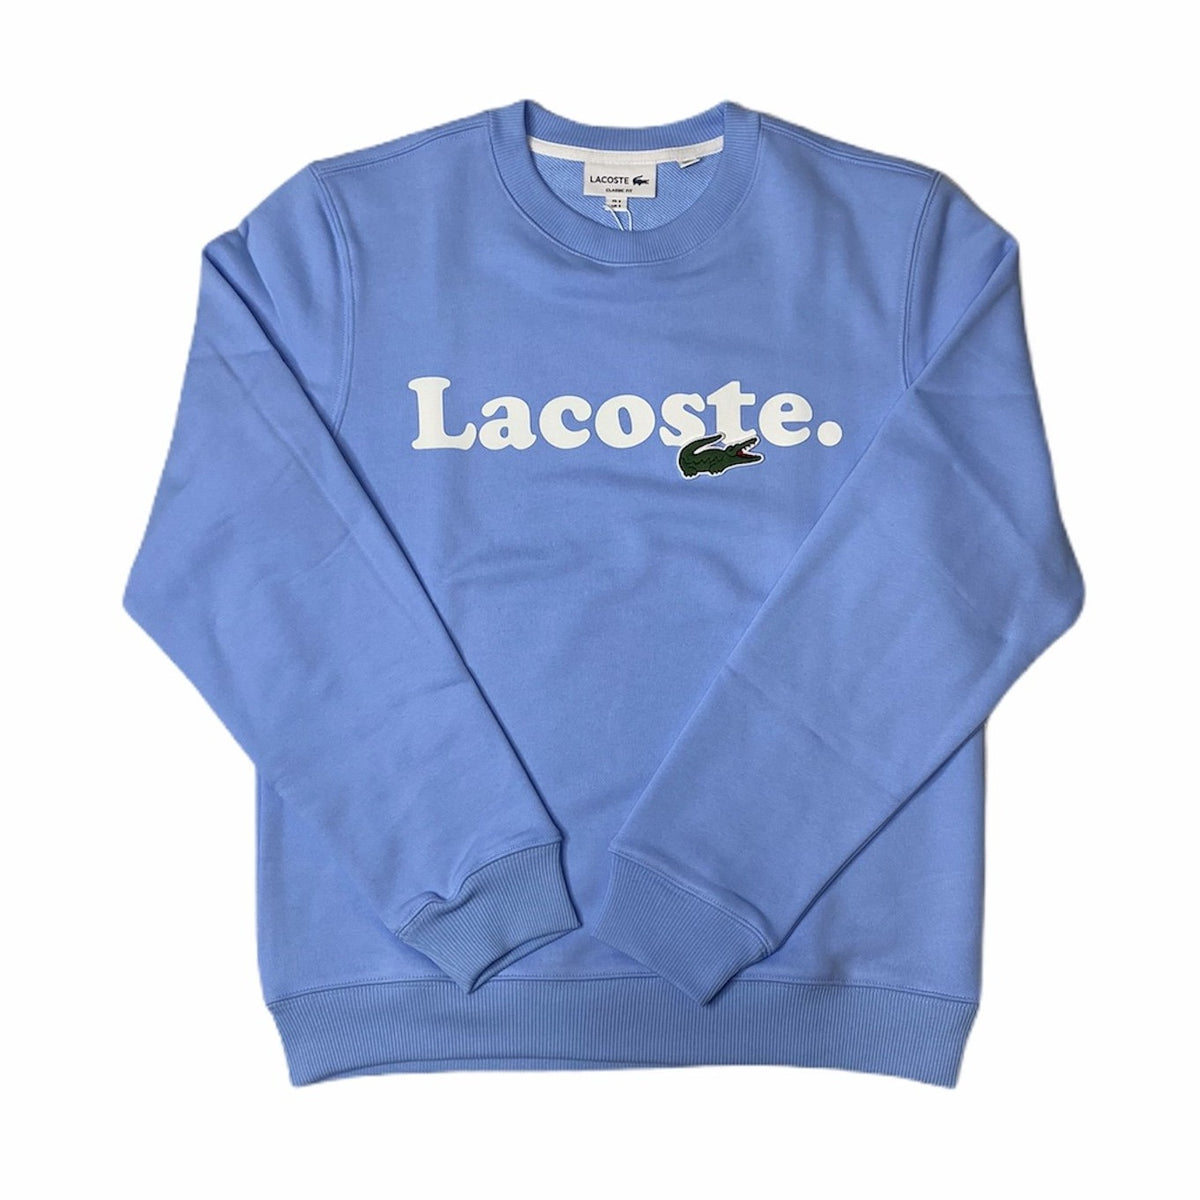 LaCoste-Lacoste And Crocodile Branded Fleece Sweatshirt-Blue • HBP-SH2173